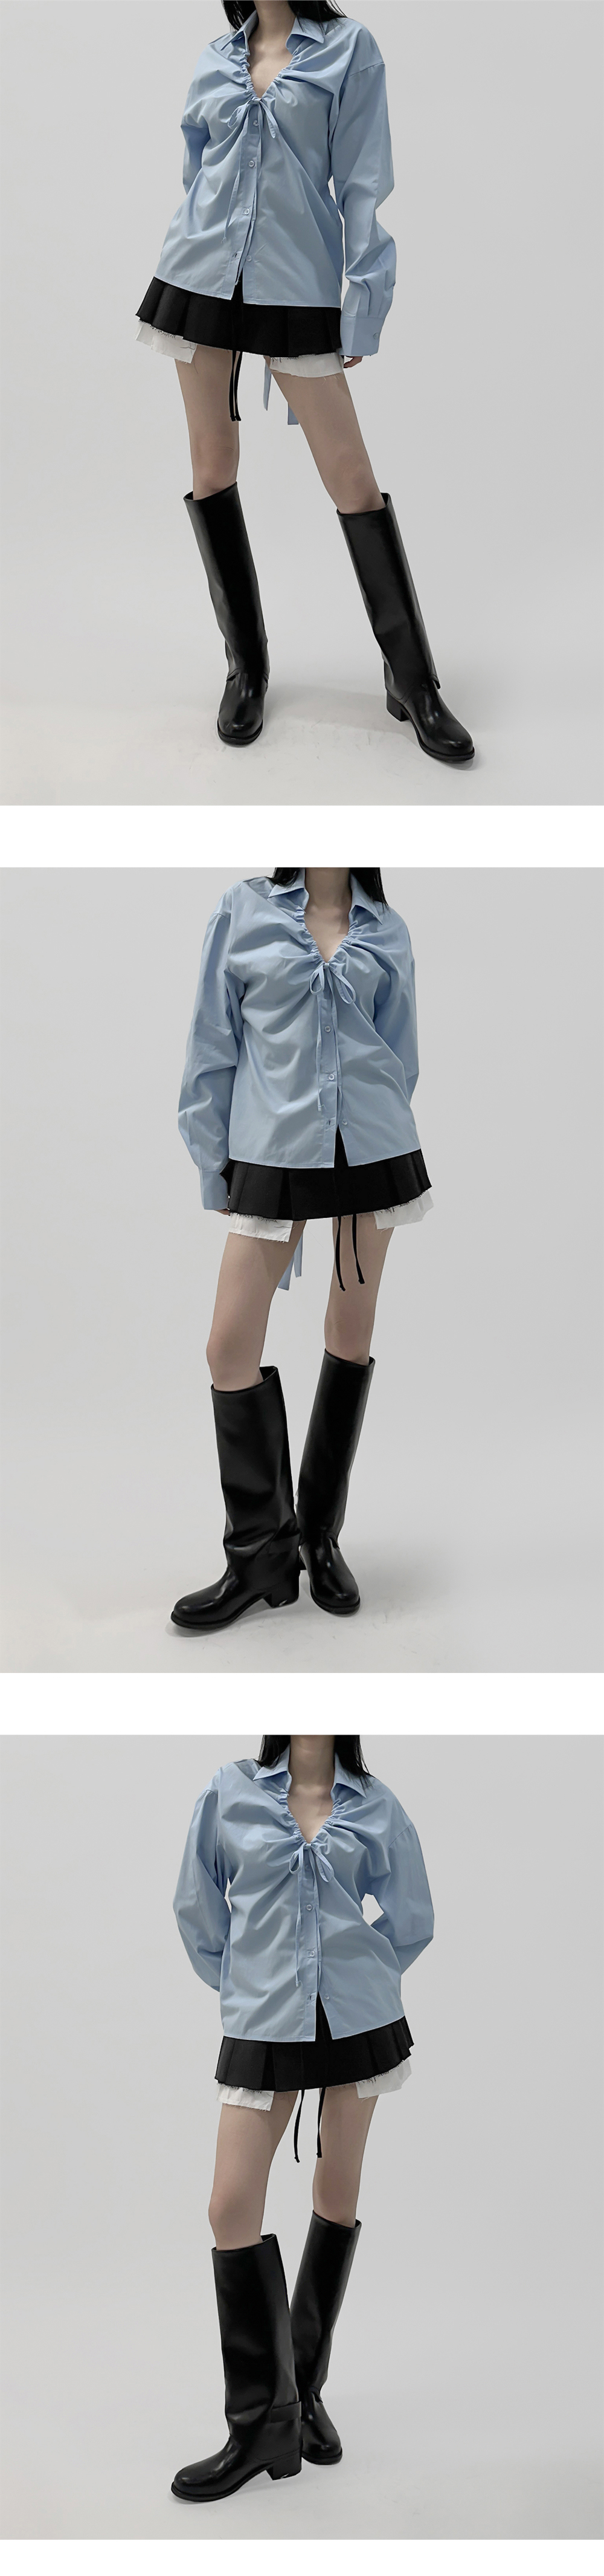 shorts model image-S1L4